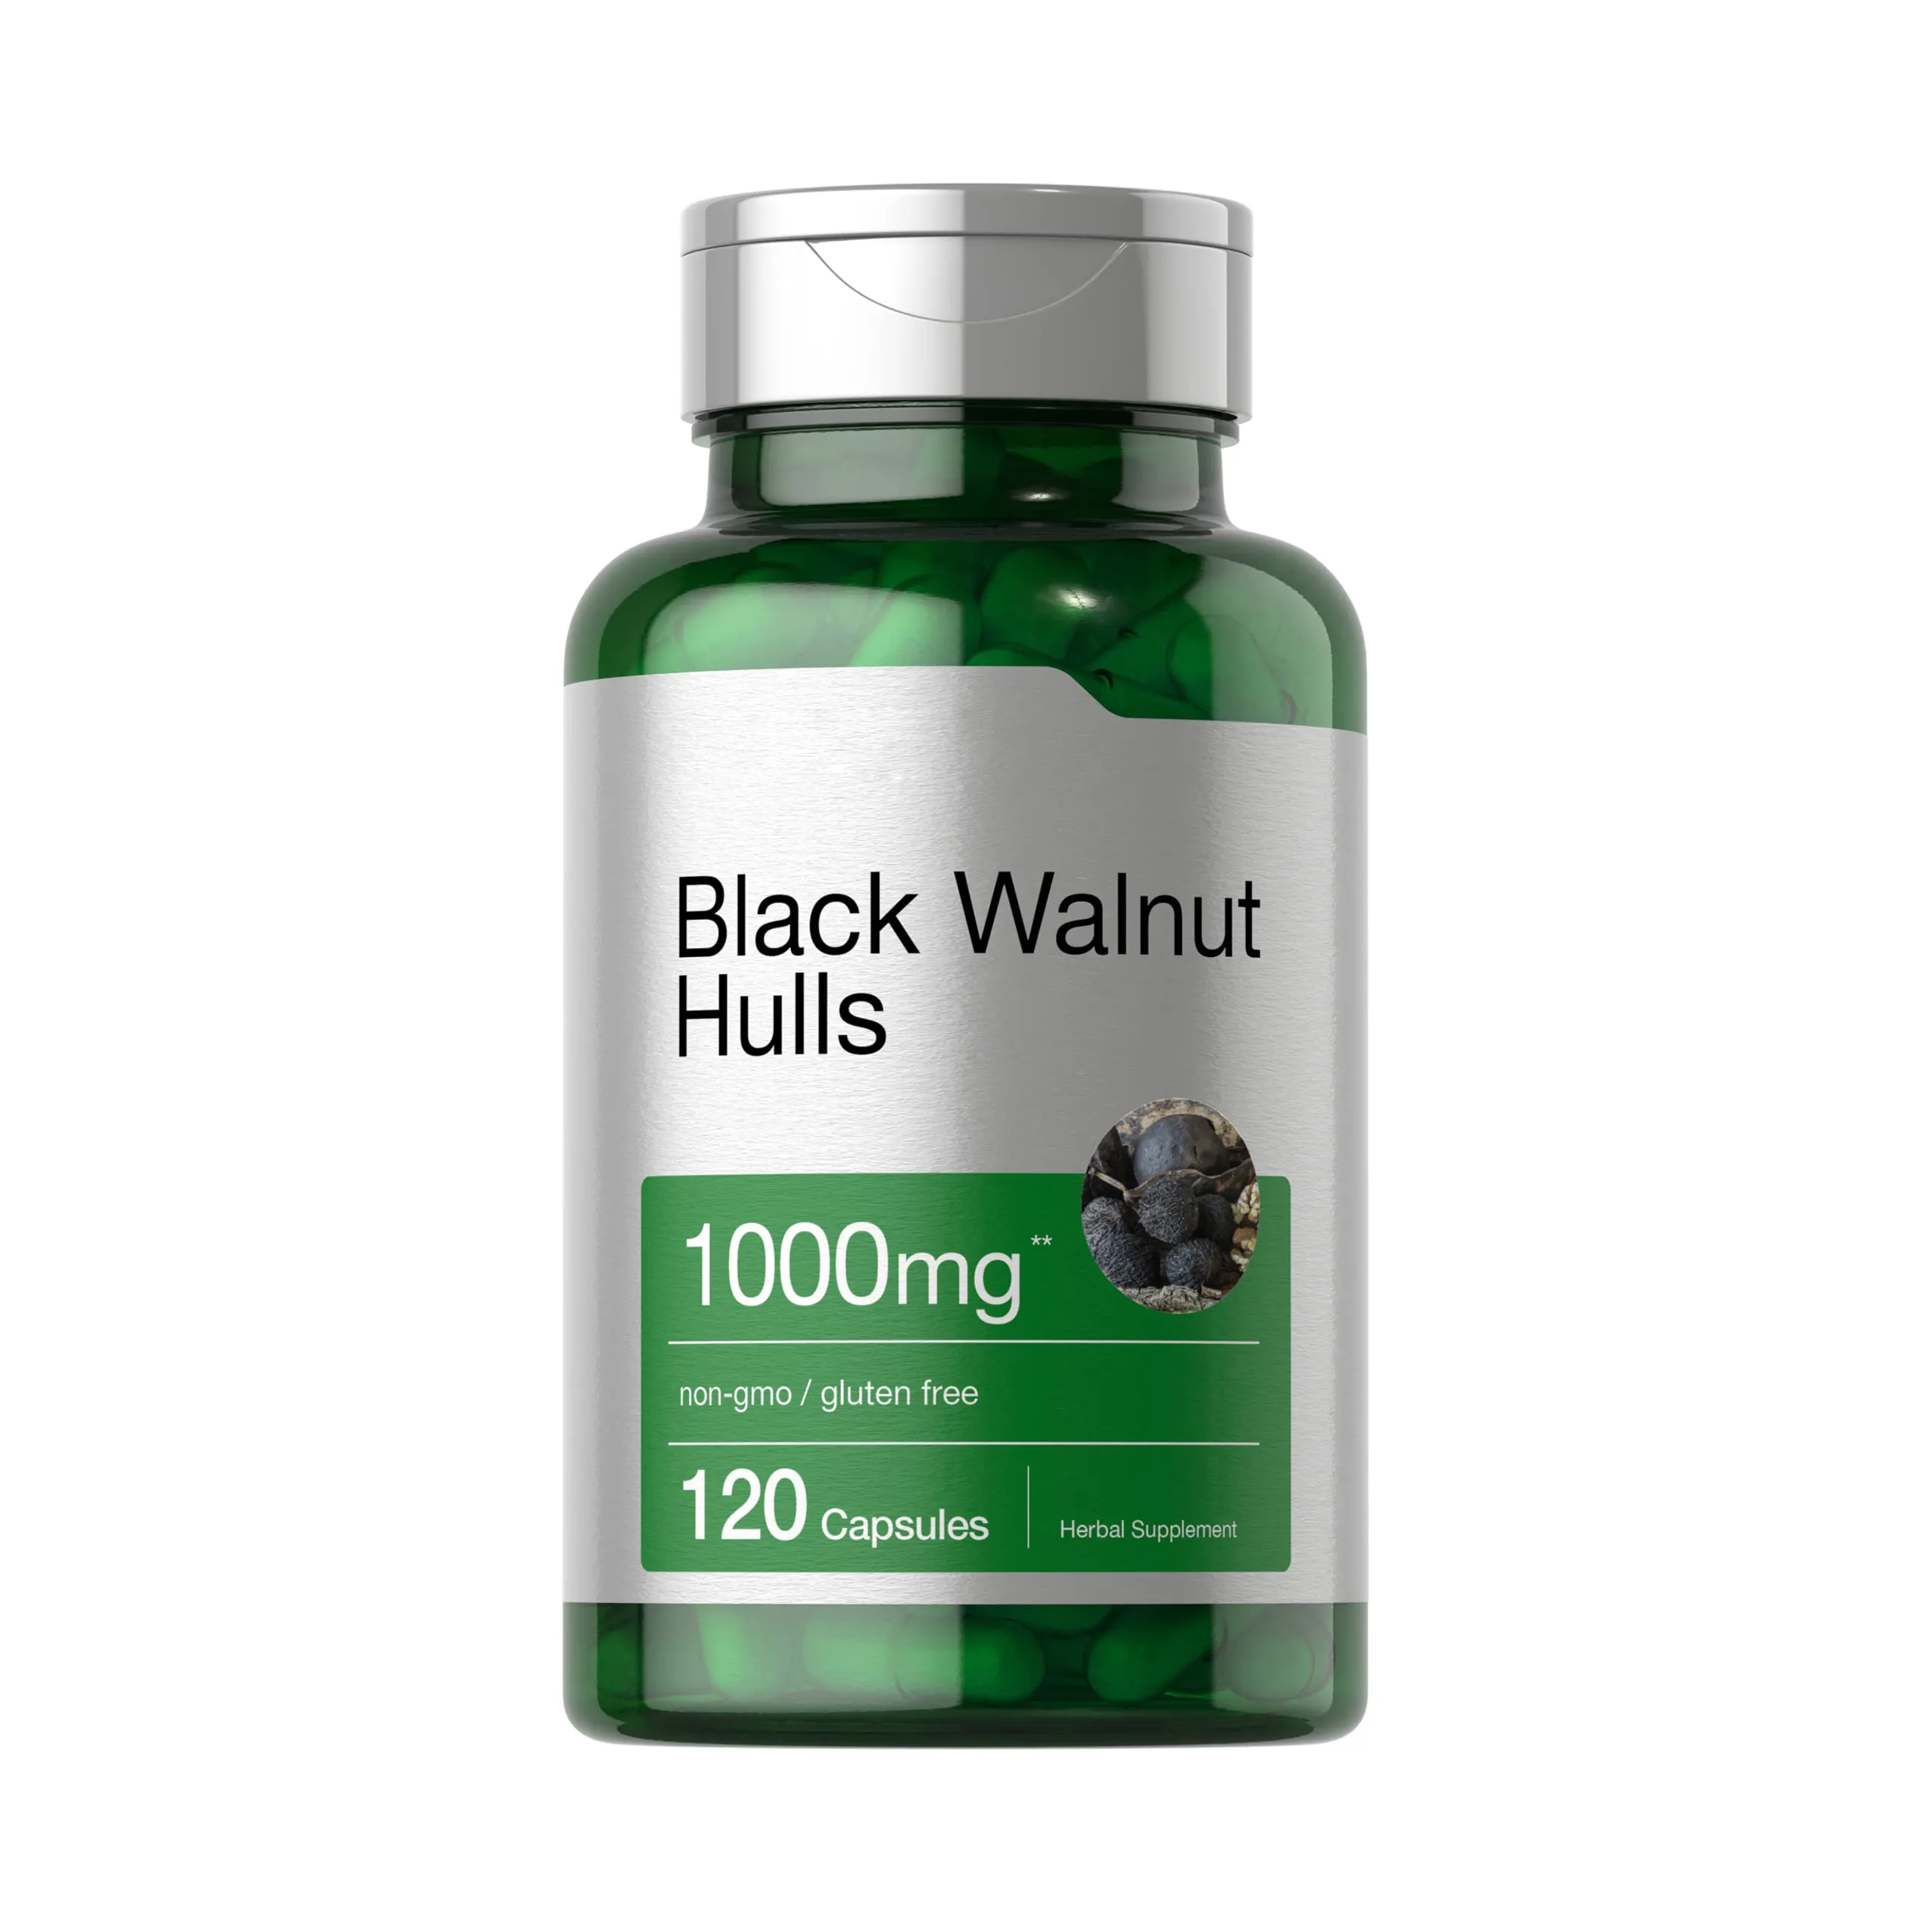 Kapsul Hulls Walnut hitam untuk GMP yang tidak dimodifikasi alternatif bebas Gluten tanpa pengujian hewan